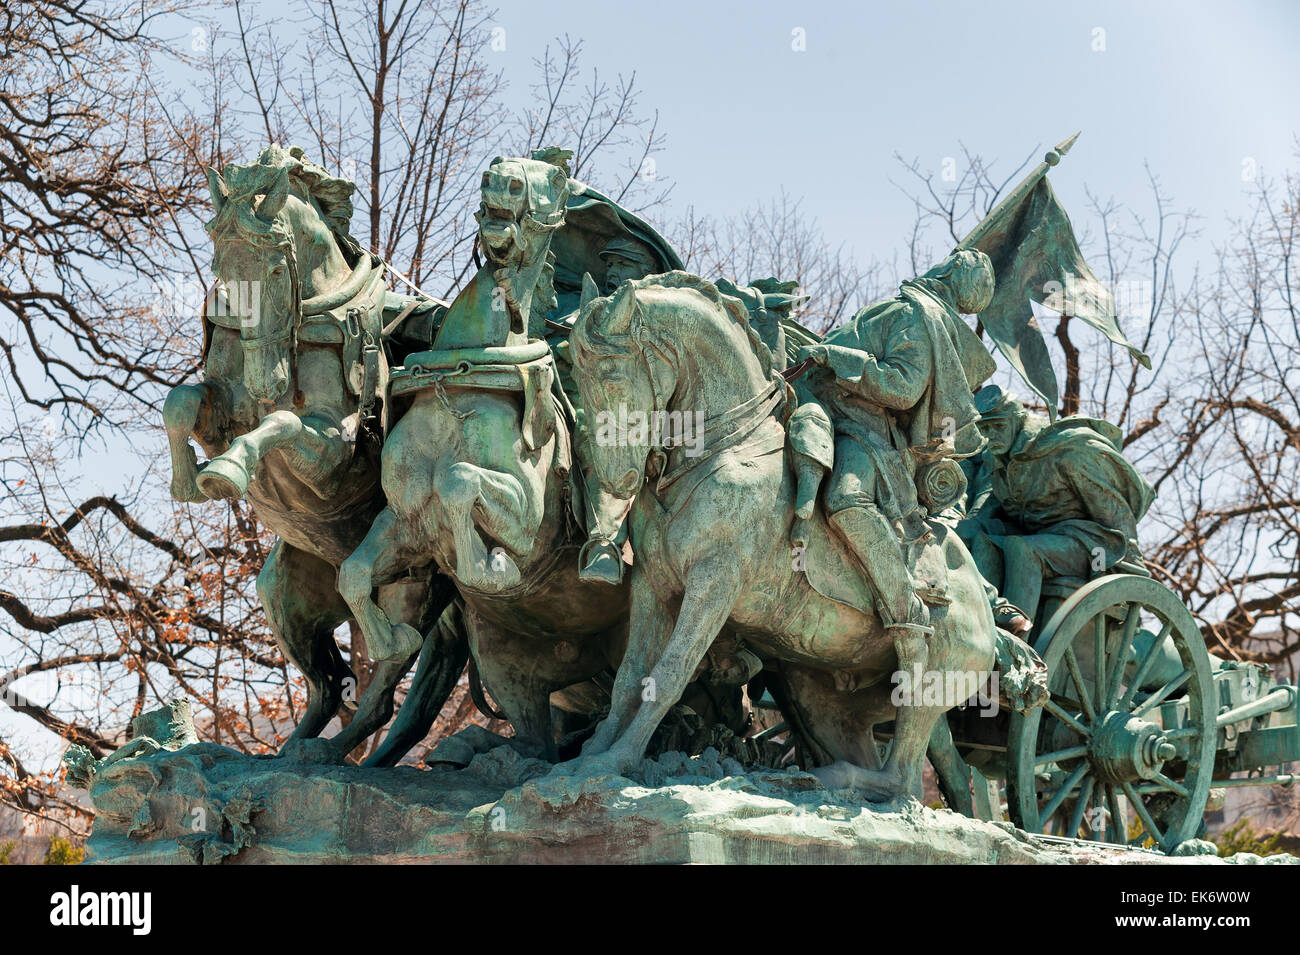 Civil War Memorial Statue near the Ulysses S. Grant Memorial in front o the US Capitol Building Stock Photo